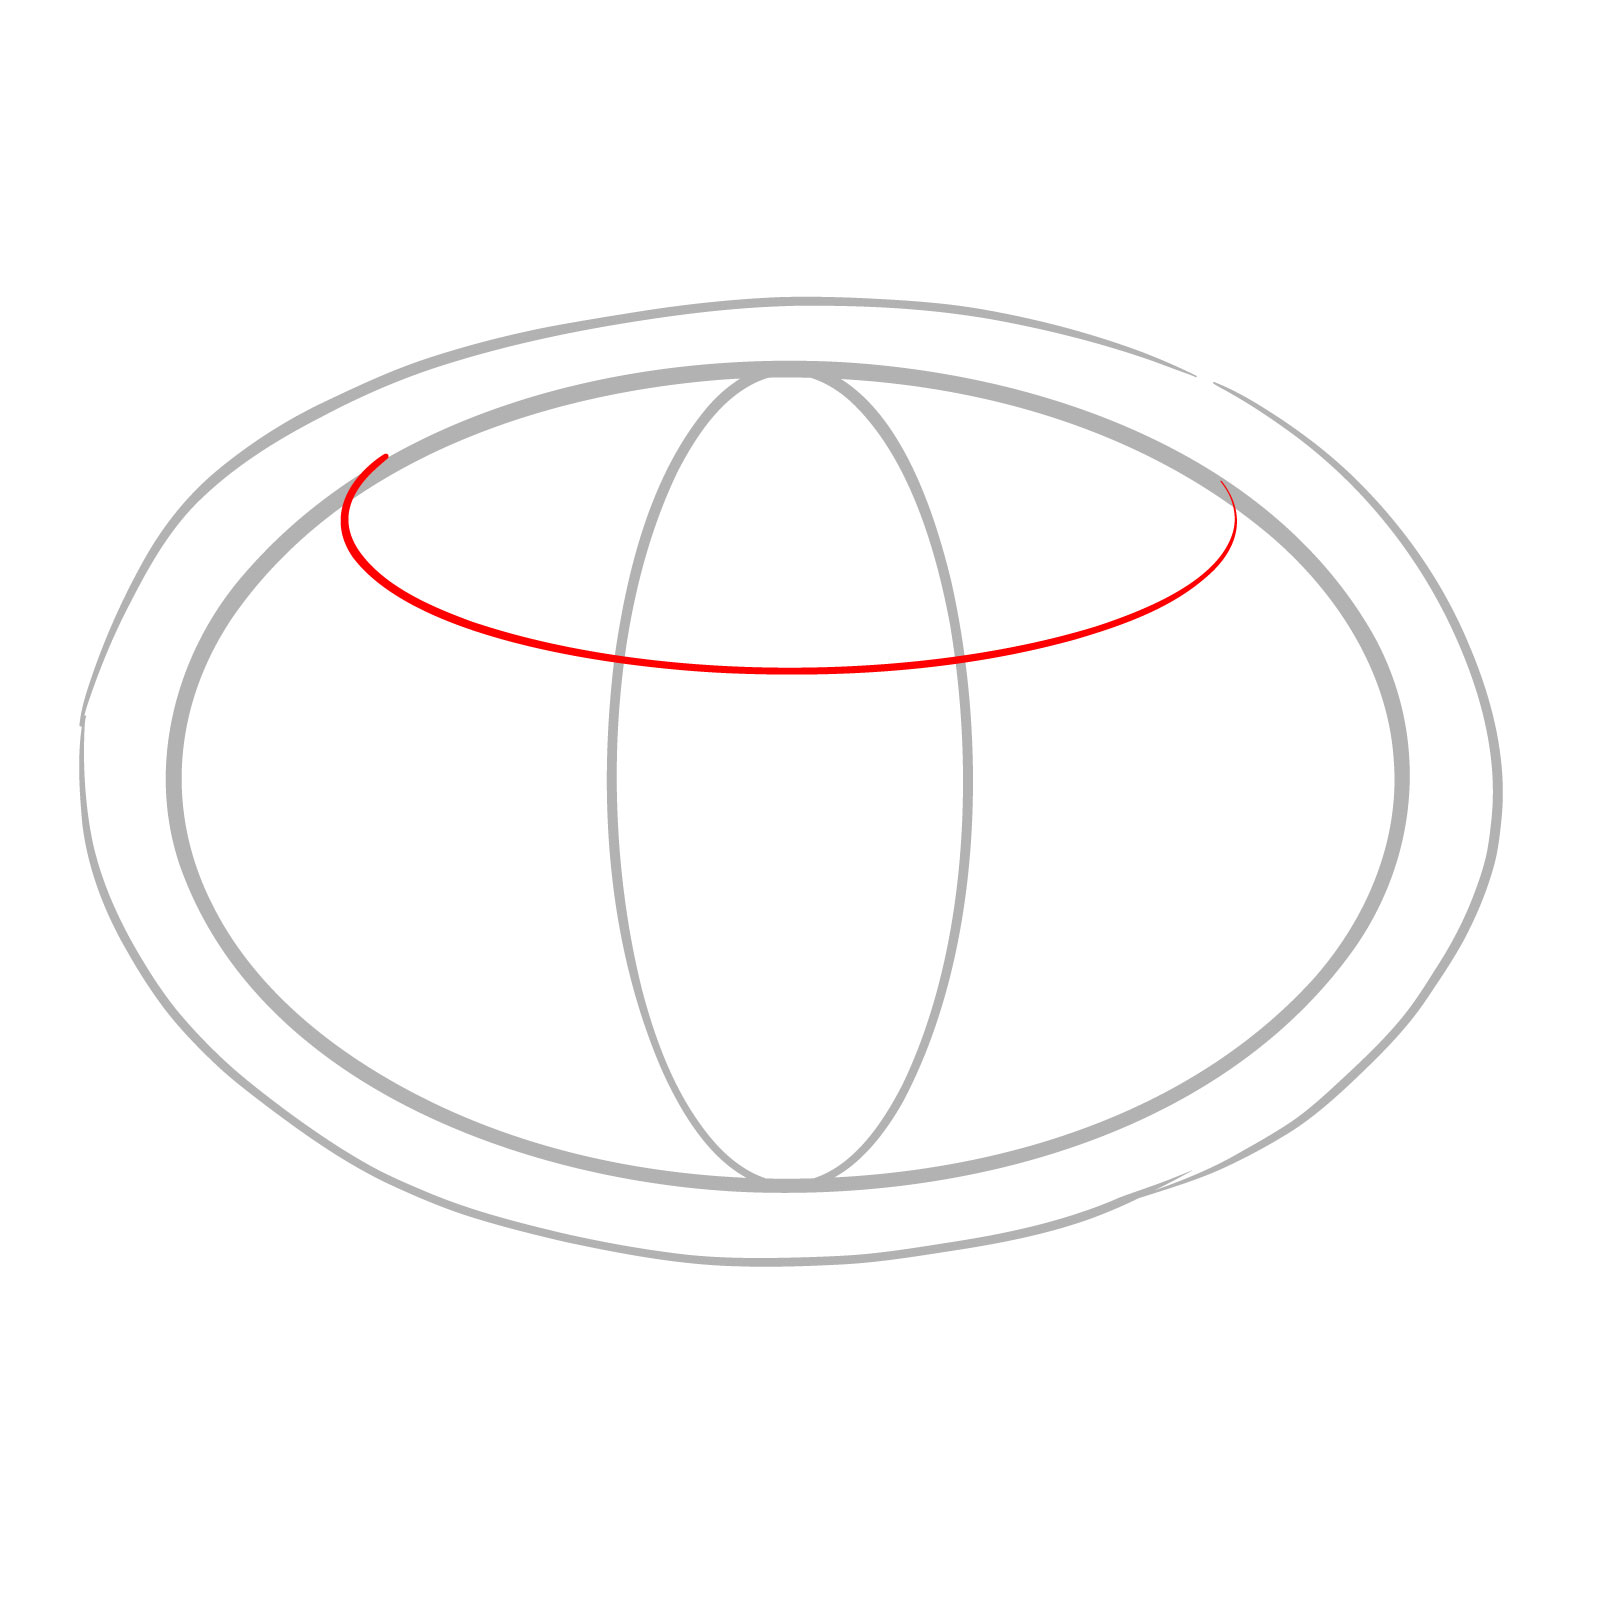 How to draw a Toyota logo - step 03